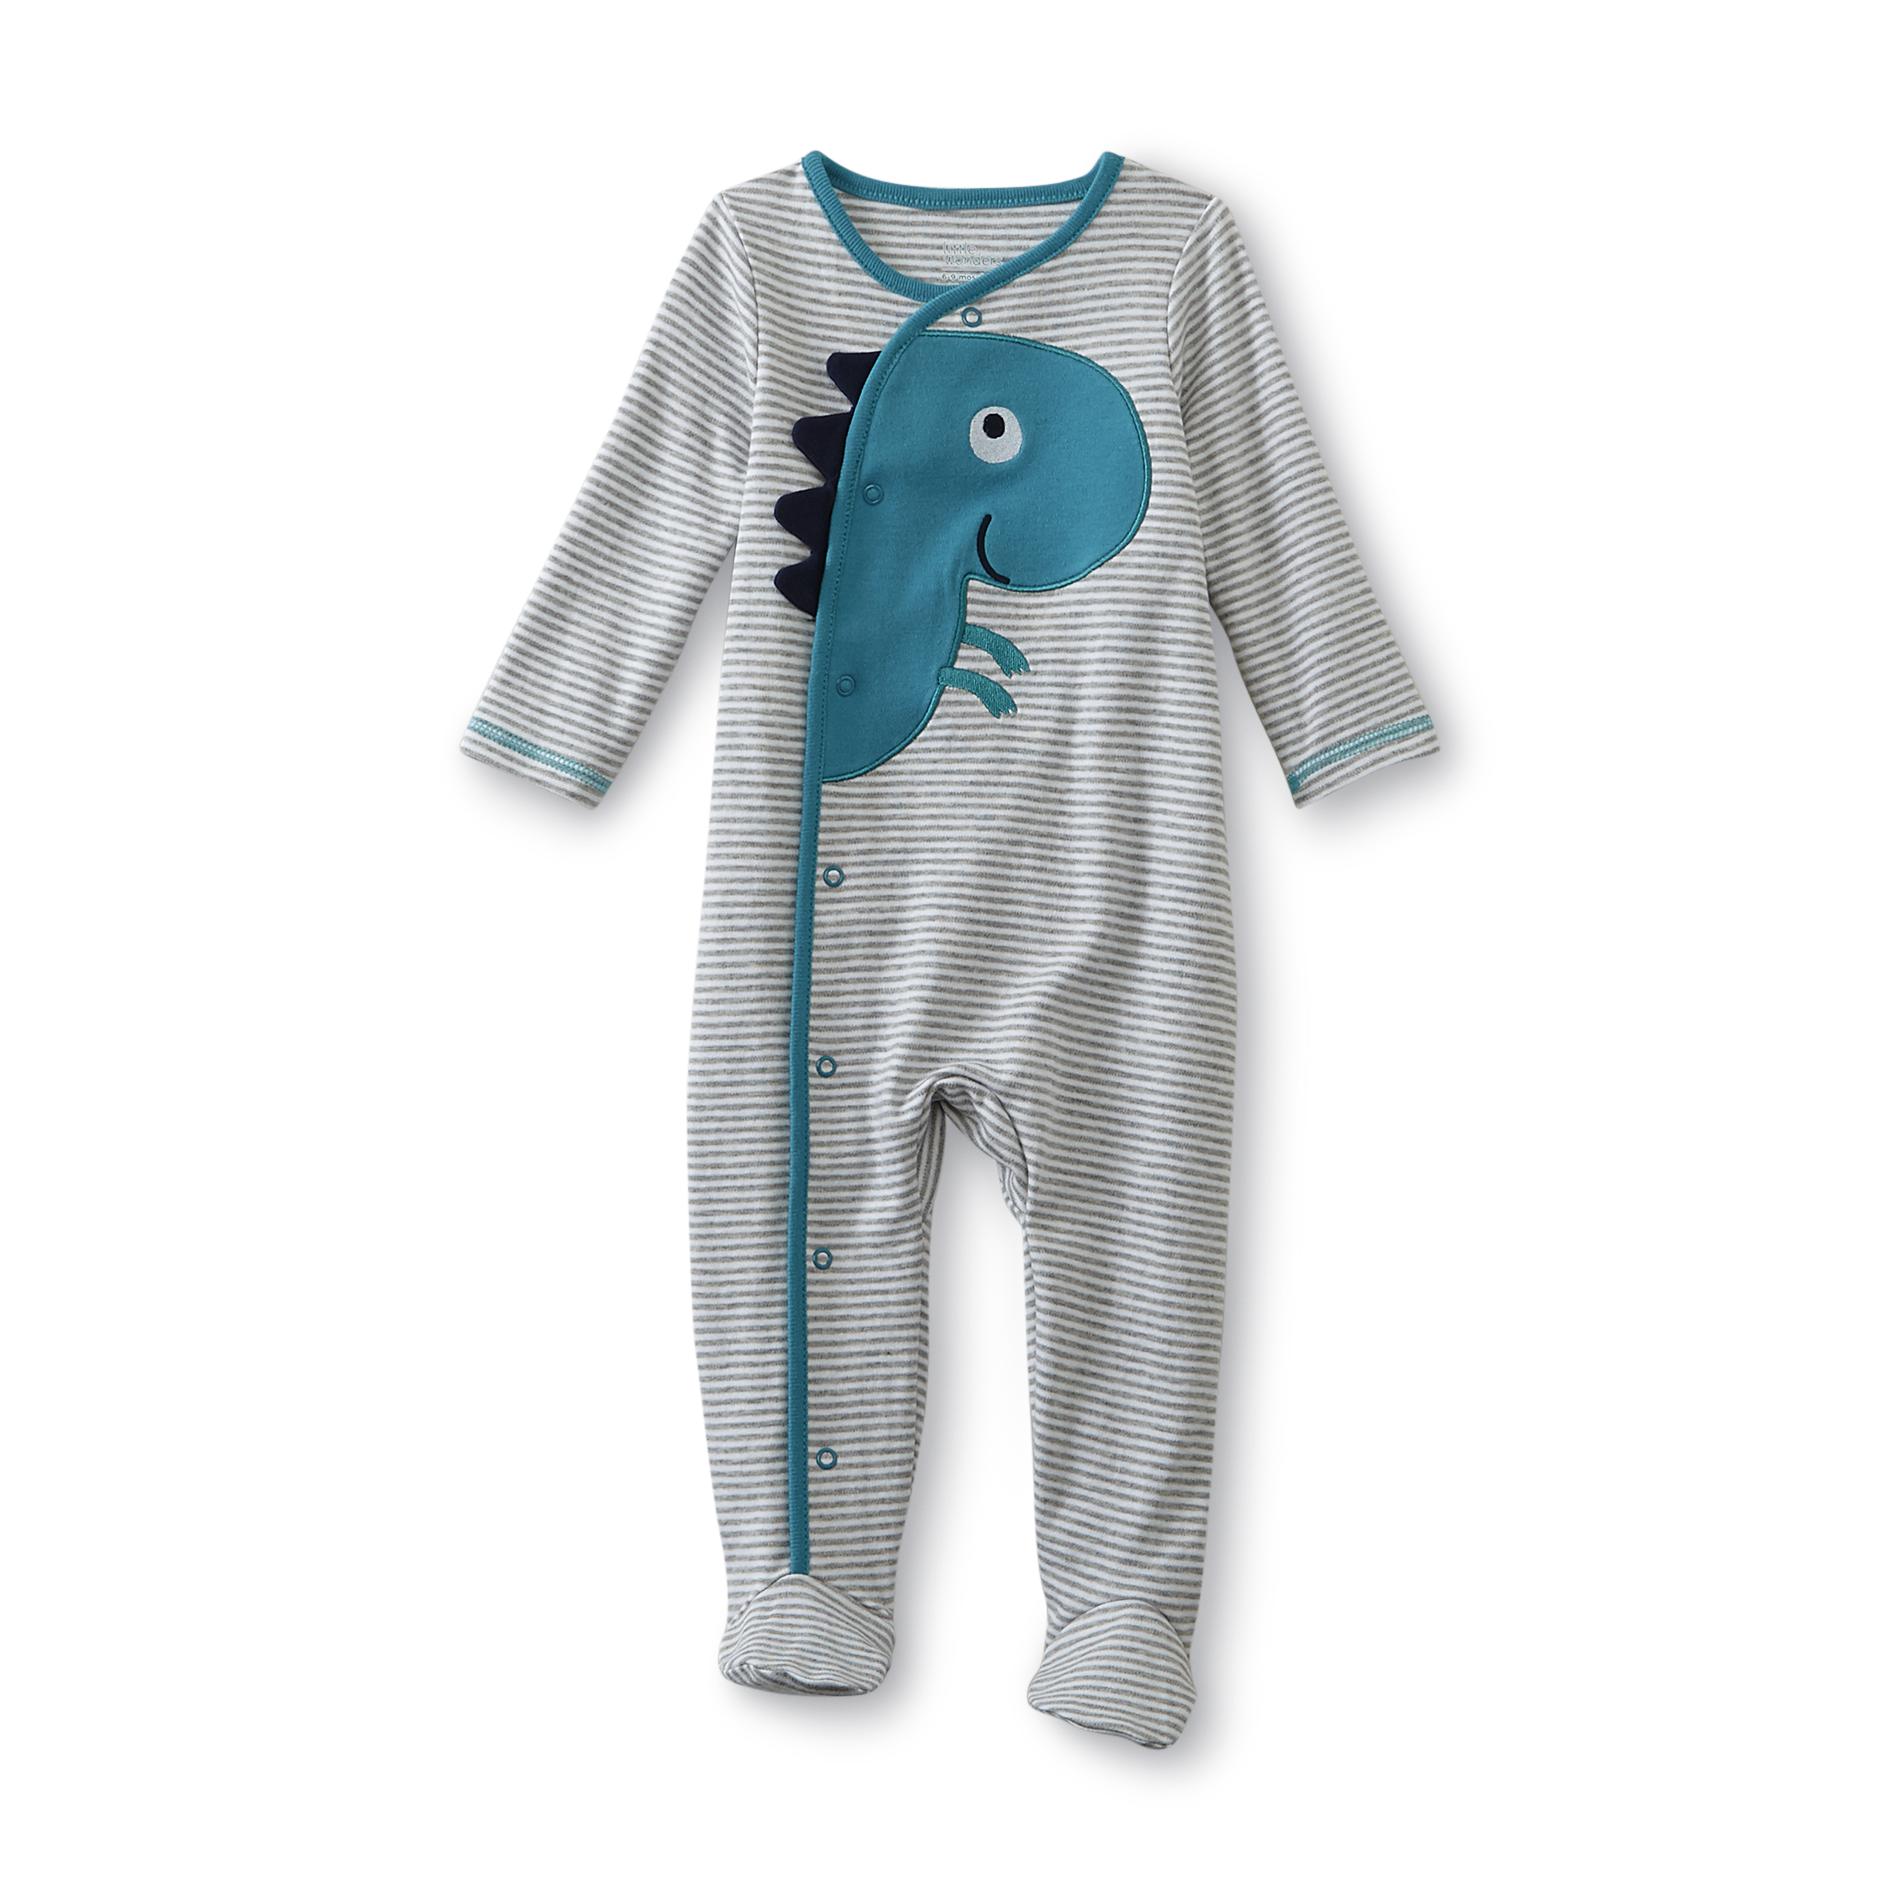 Little Wonders Newborn Boy's Sleeper Pajamas - Striped & Dinosaur